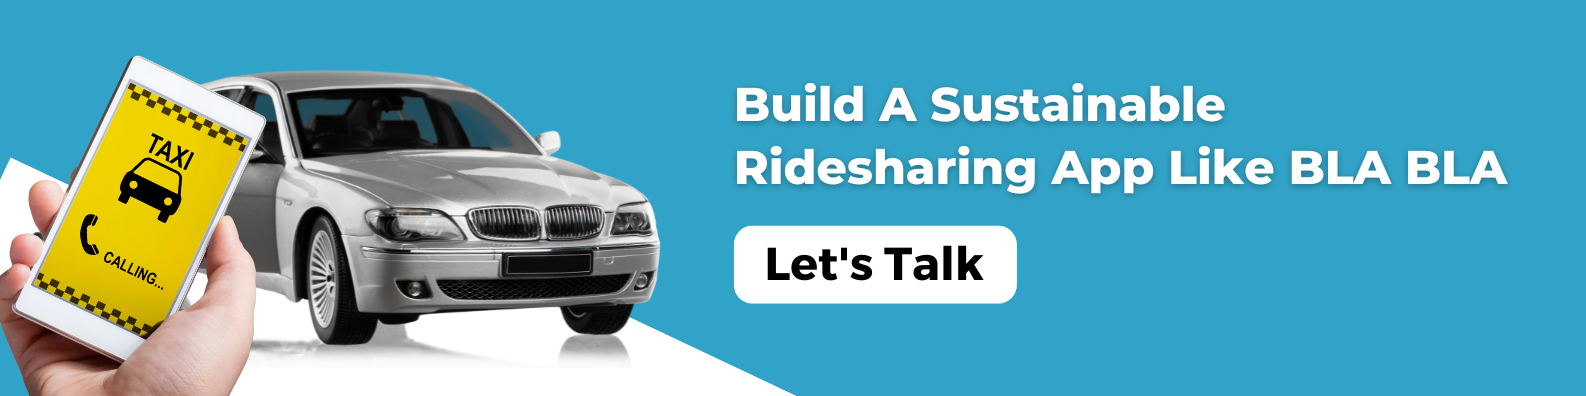 RideShare App Like Bla Bla